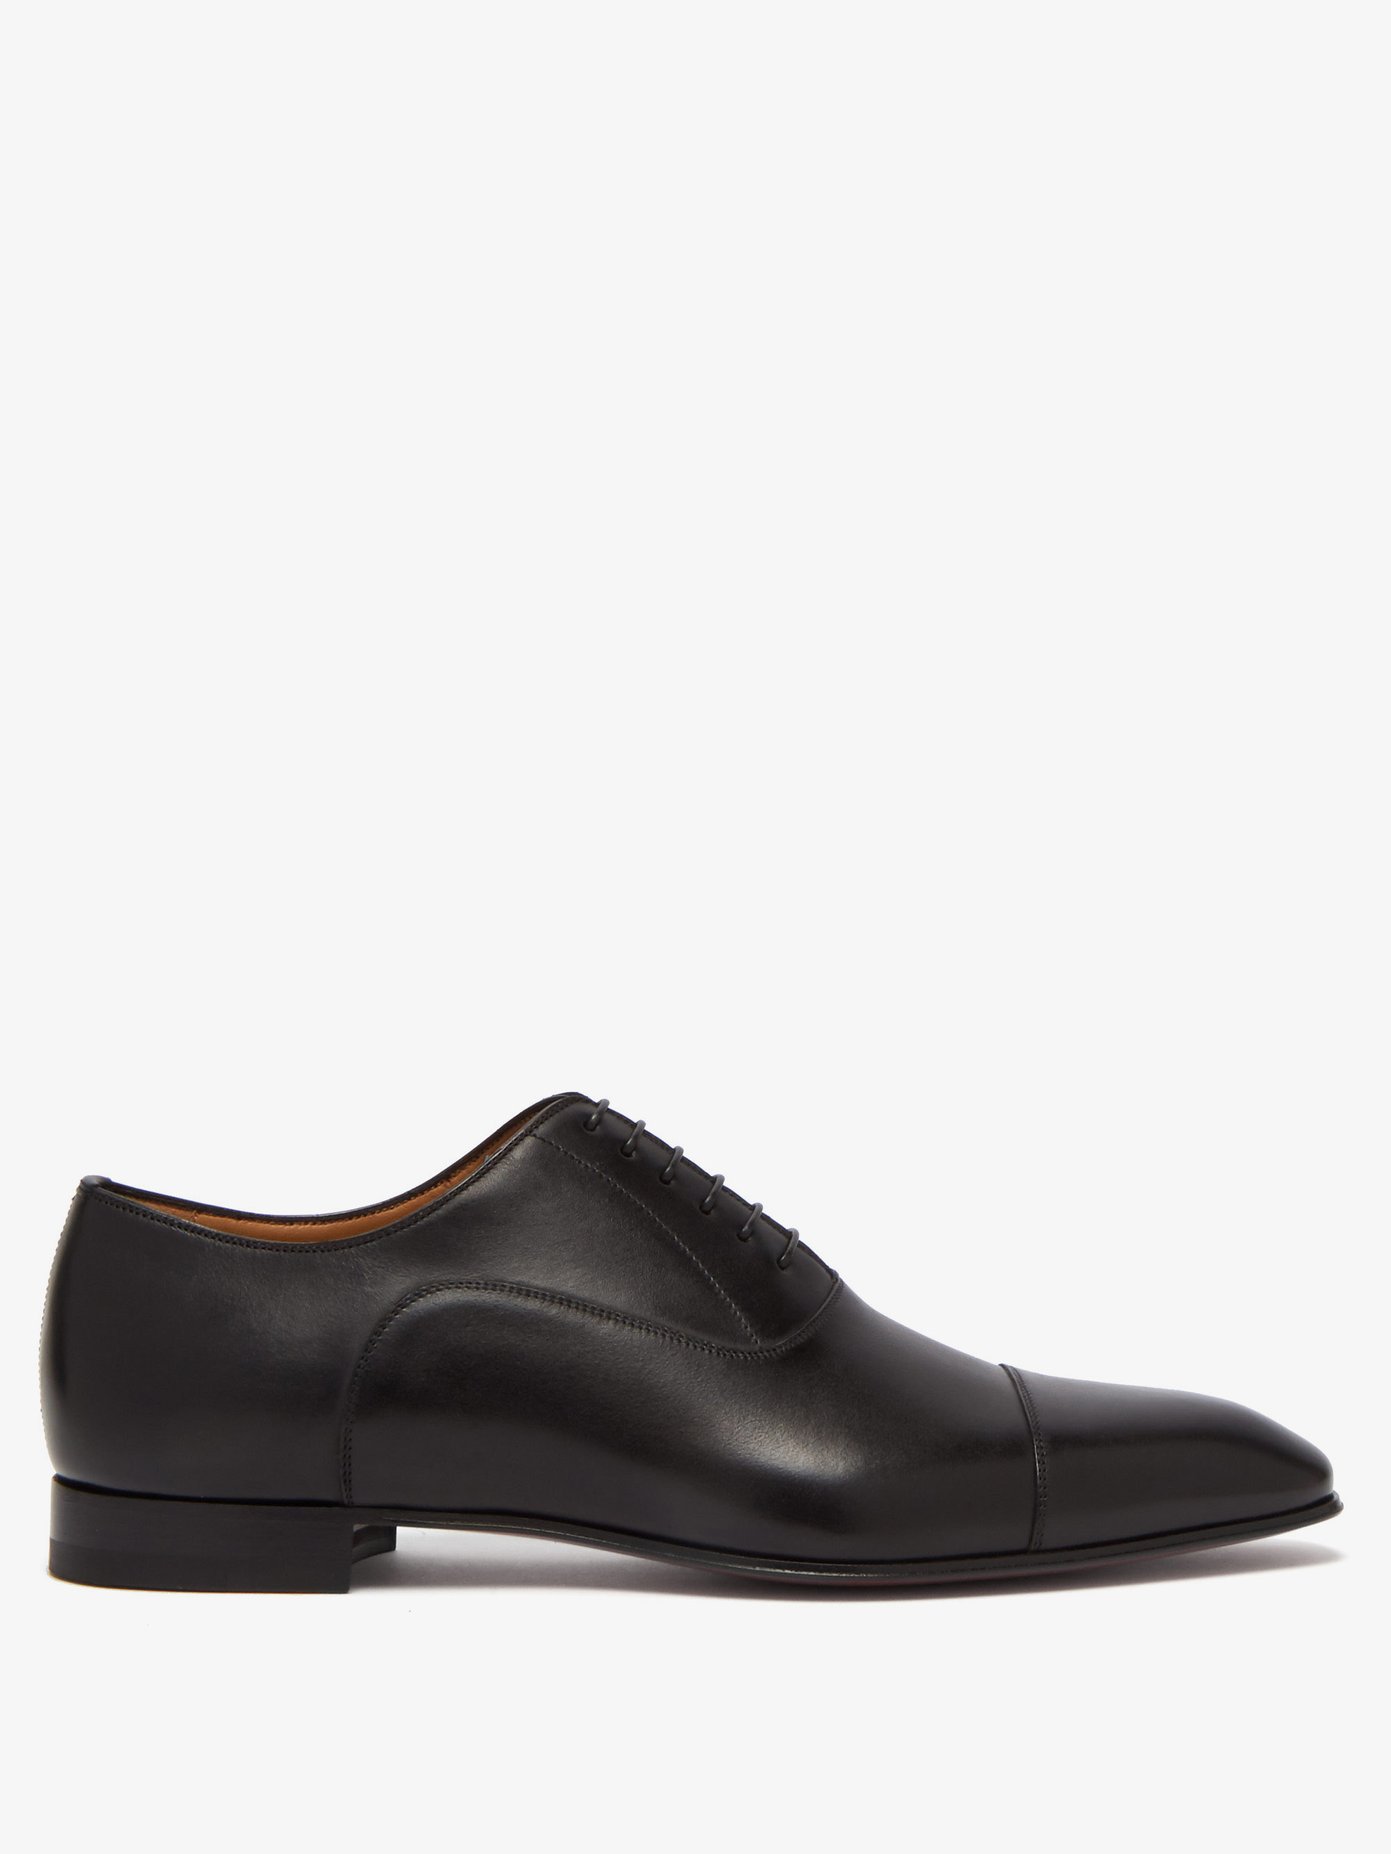 Greggo leather oxford shoes | Christian 